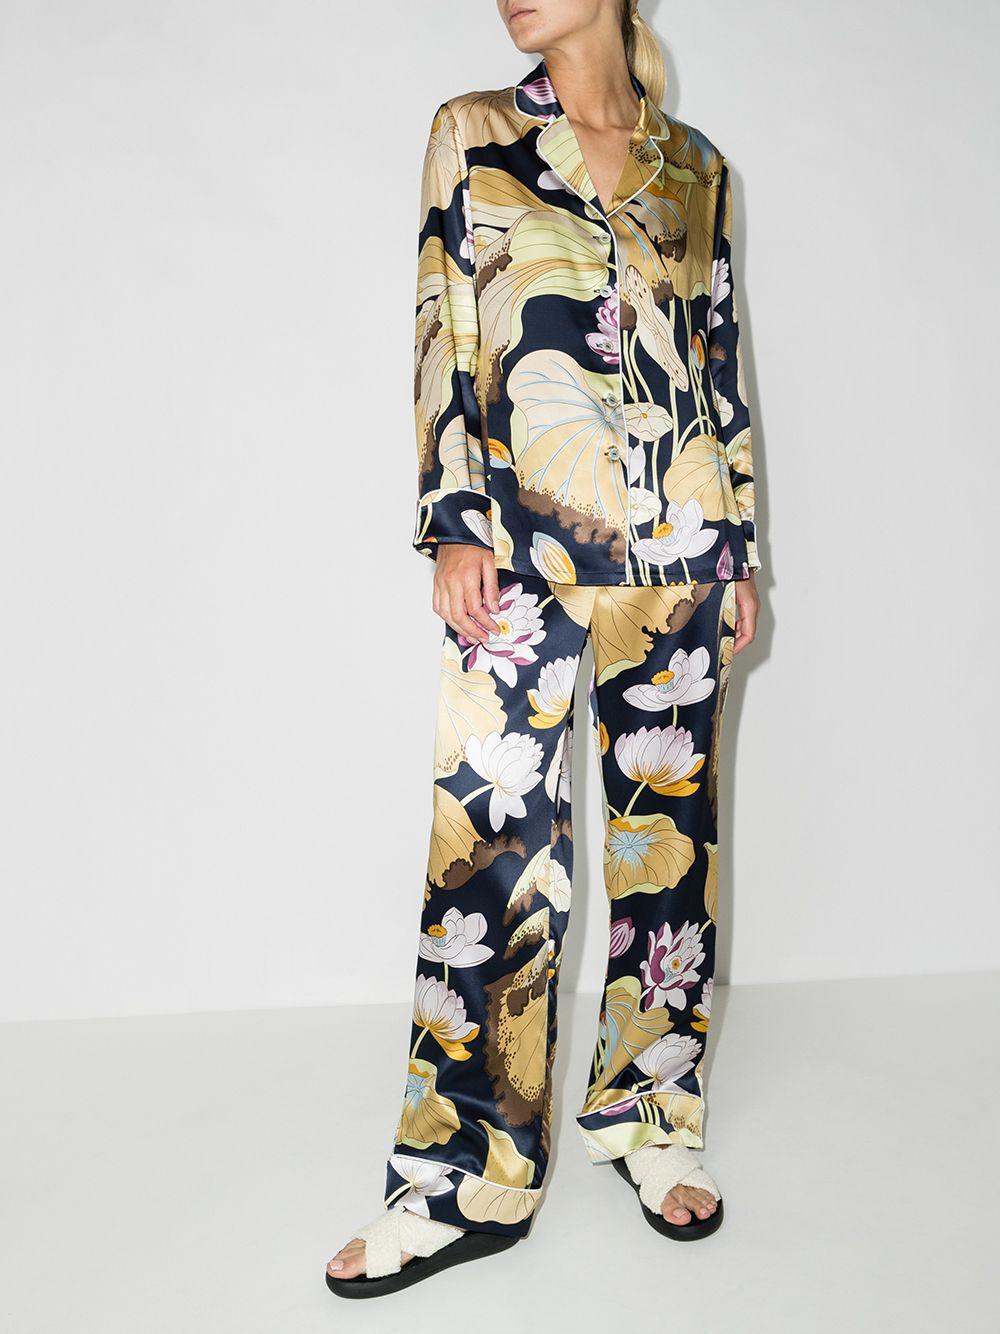 Women's NEW Olivia Von Halle Silk Floral Print Lounge Home Sleep Wear Suit S For Sale